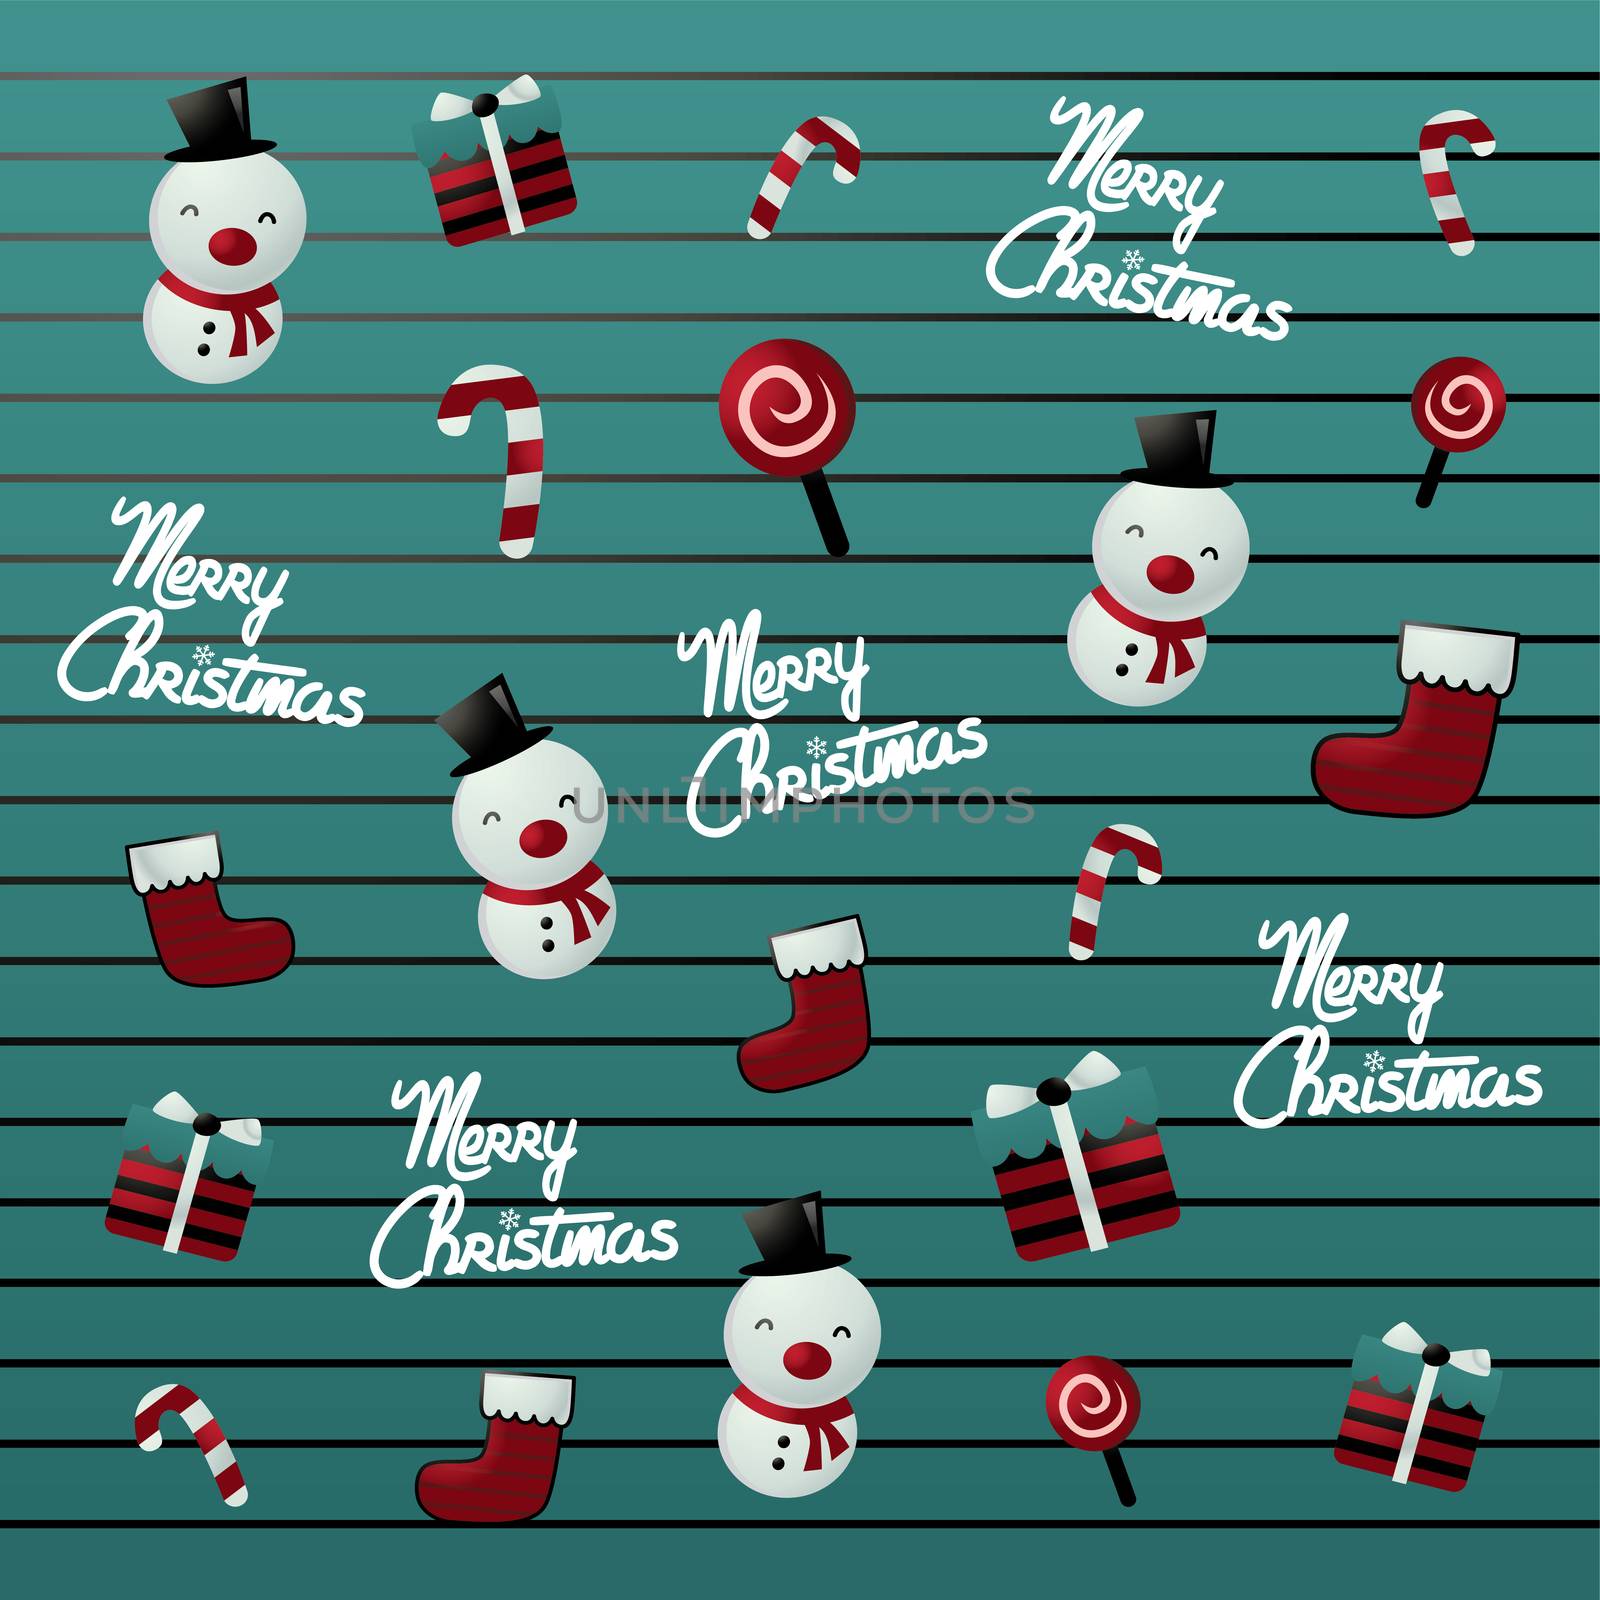 merry christmas celebration theme vector art illustration